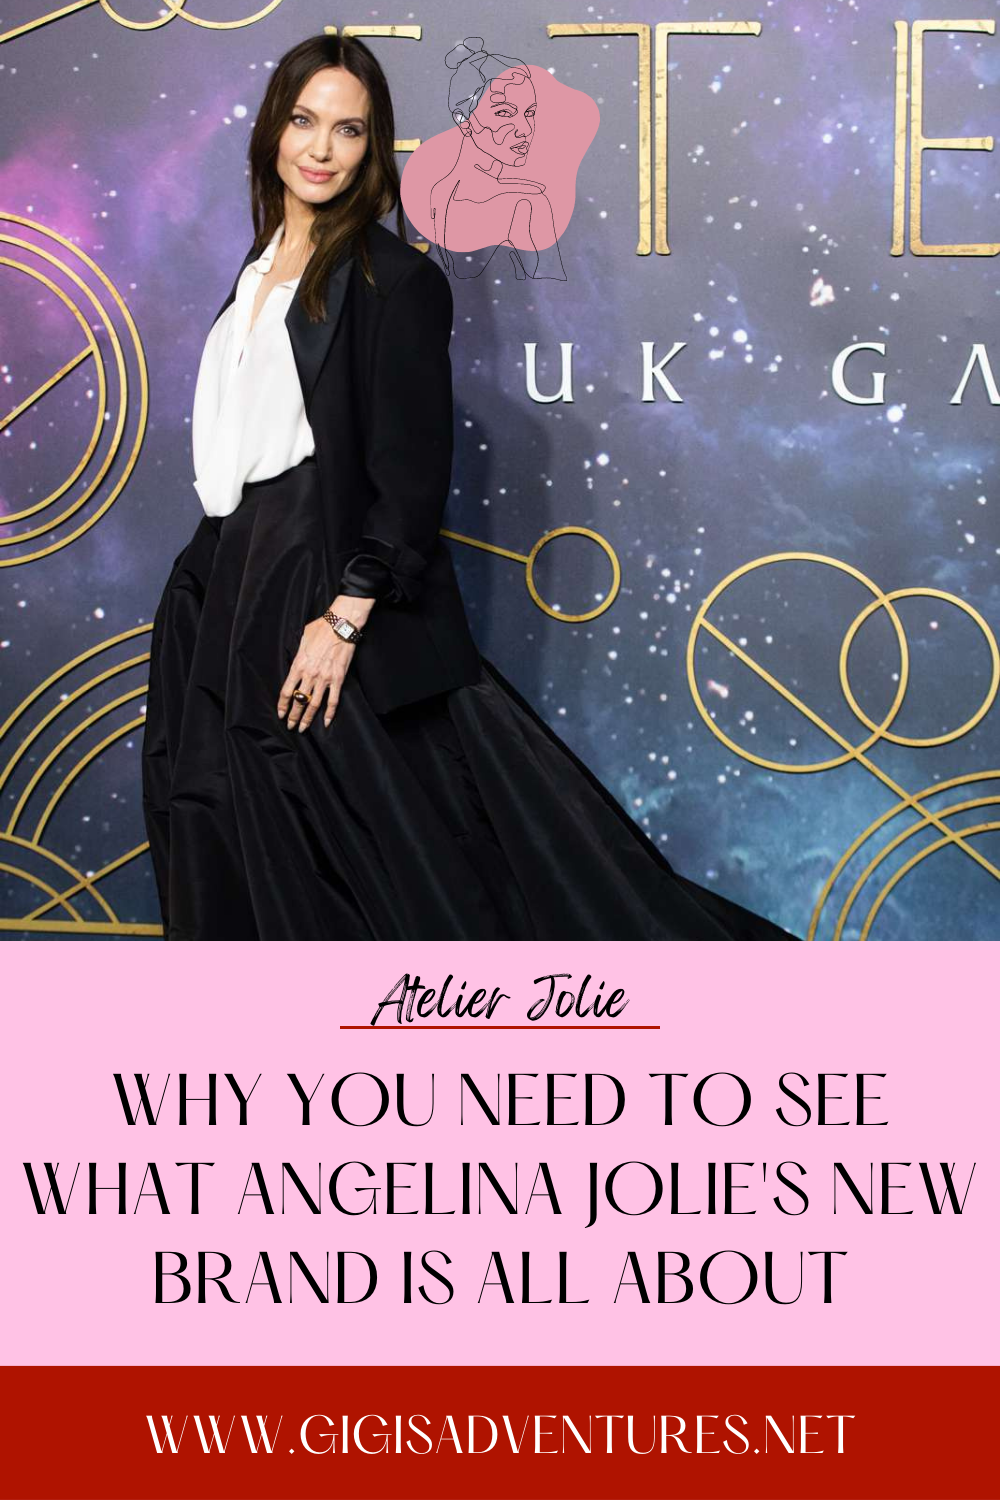 Angelina Jolie's new brand, Atelier Jolie